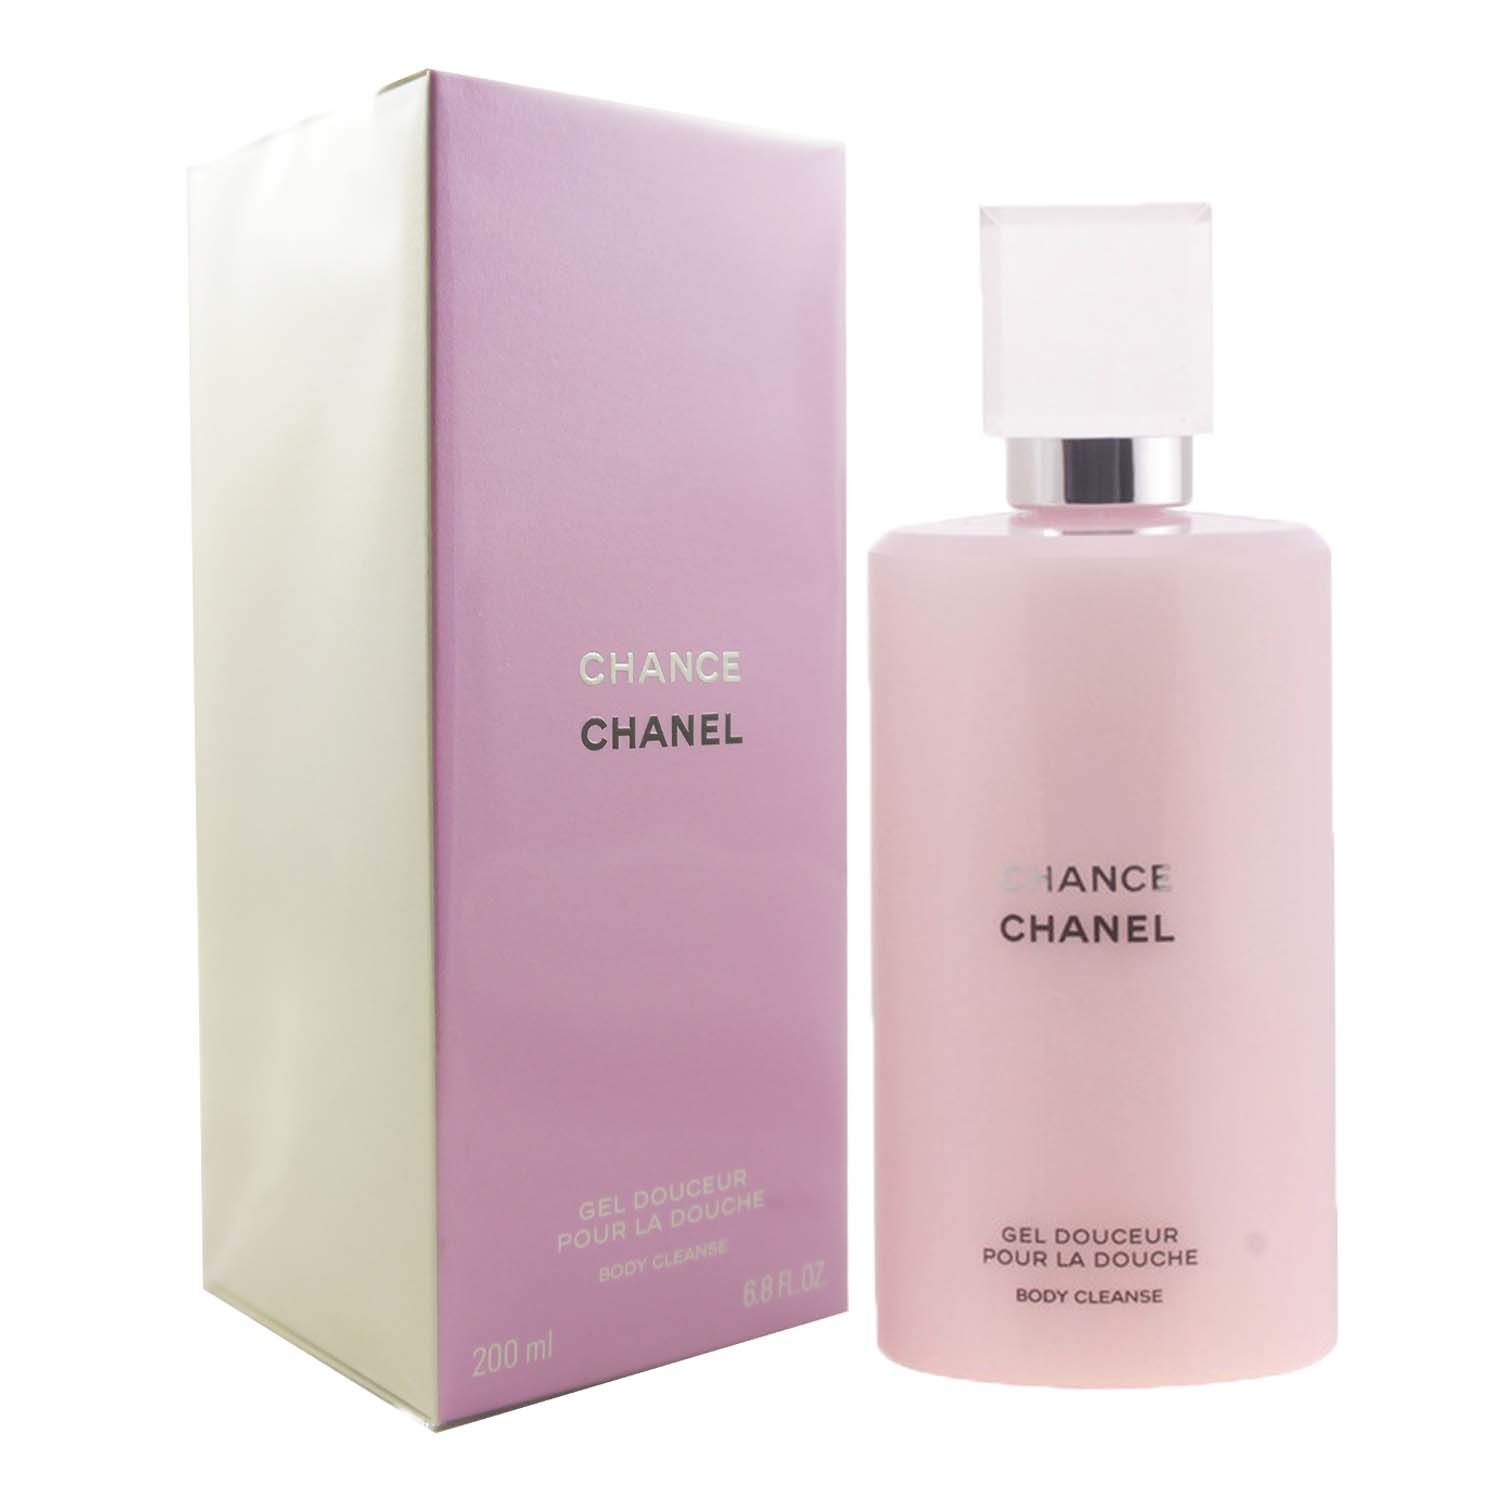 Chanel Chance 200ml Body Cleanse Bath & Shower Gel bei Riemax